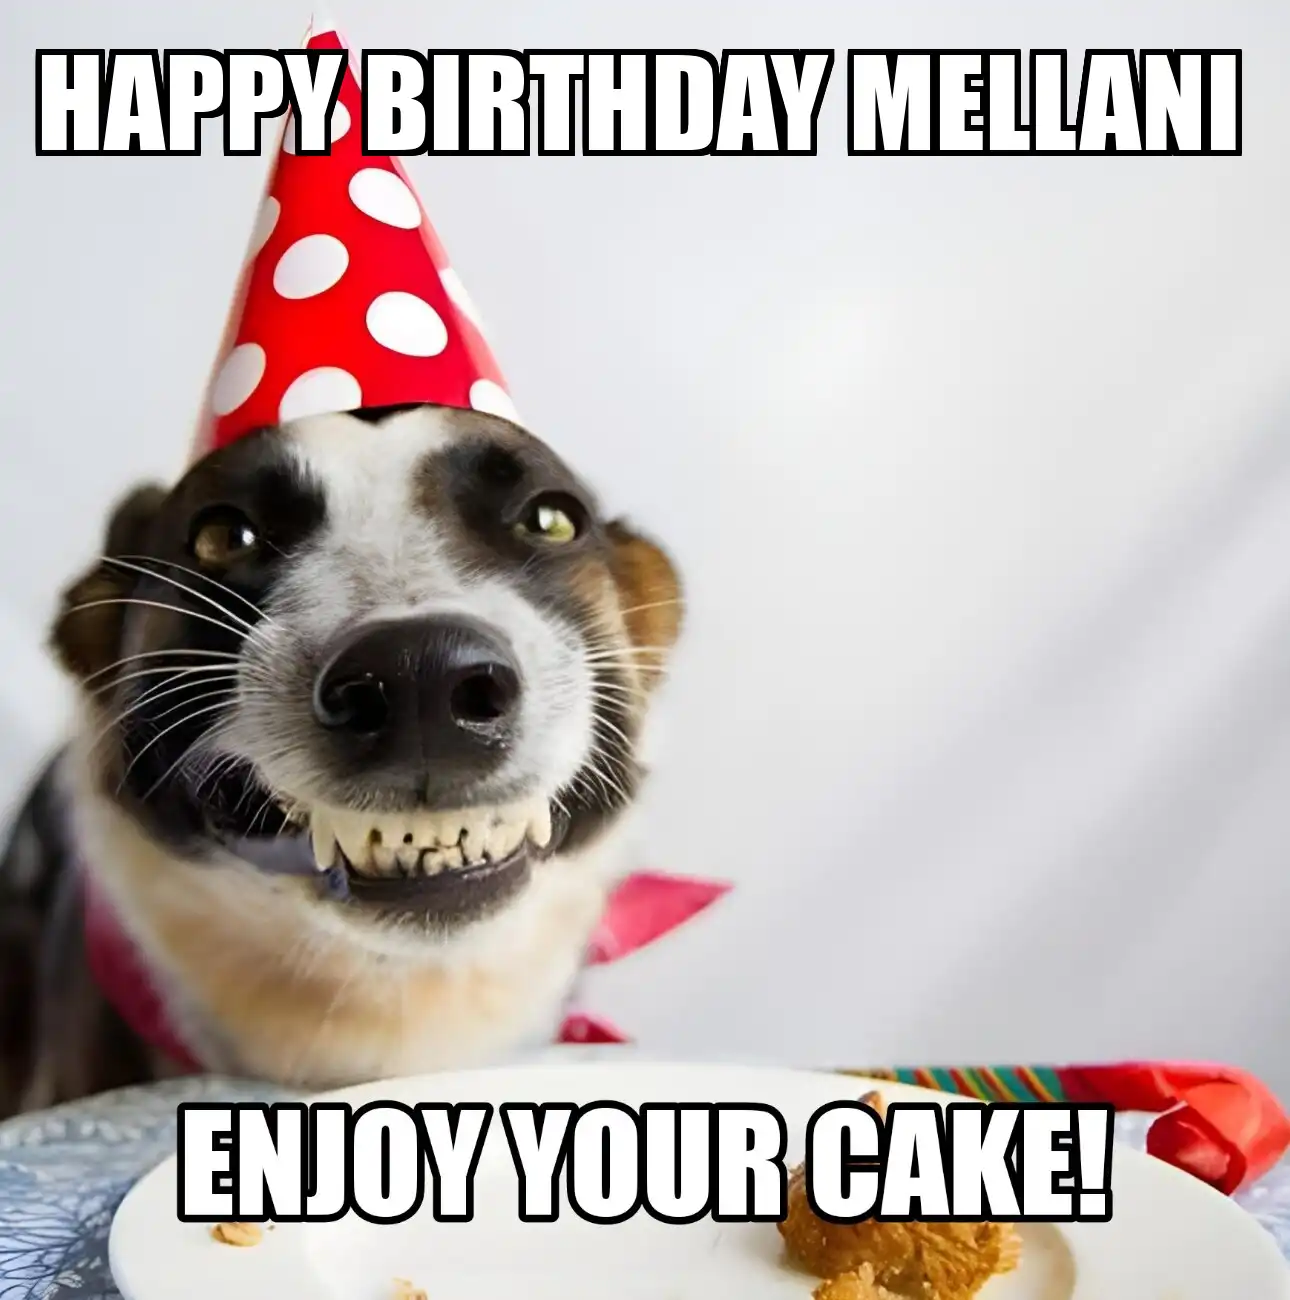 Happy Birthday Mellani Enjoy Your Cake Dog Meme